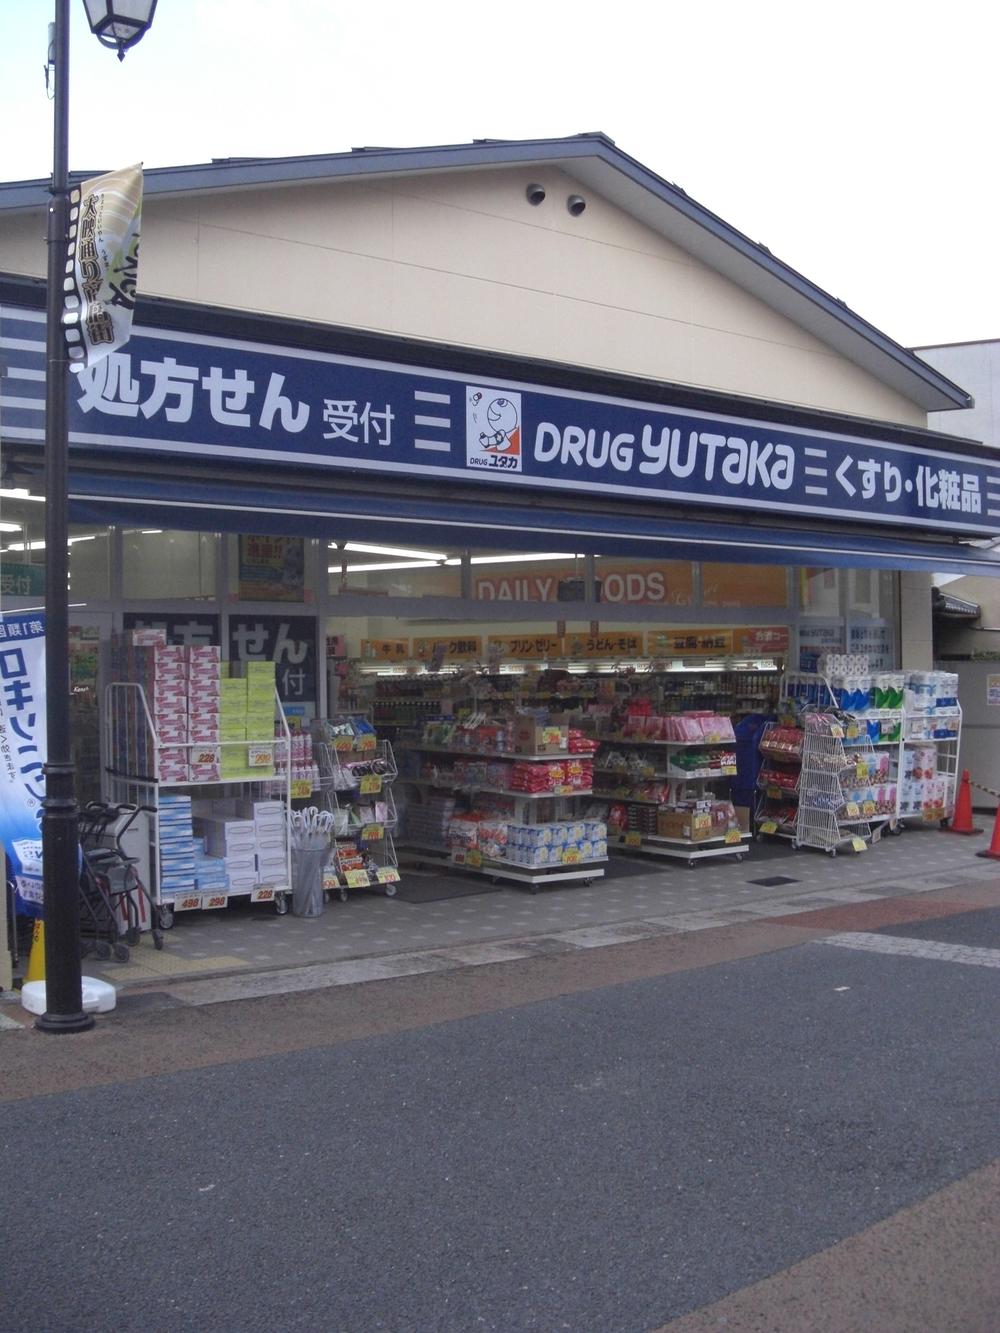 Drug store. Drag Yutaka Uzumasa to Daiei through shop 982m